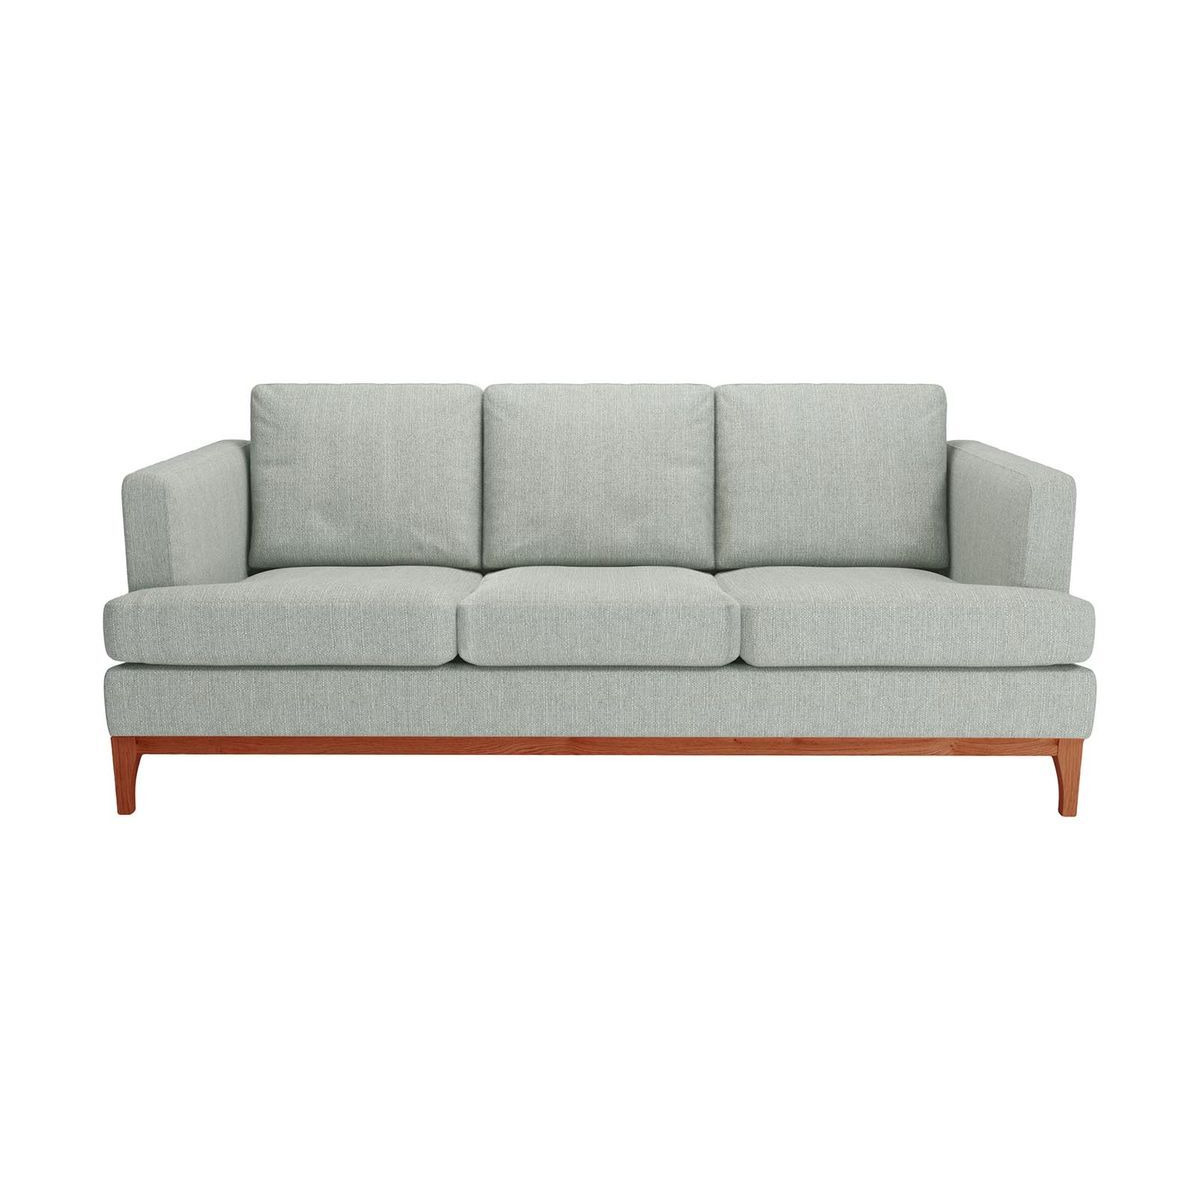 Scarlett Structured 3 Seater Sofa, light blue, Leg colour: aveo - image 1